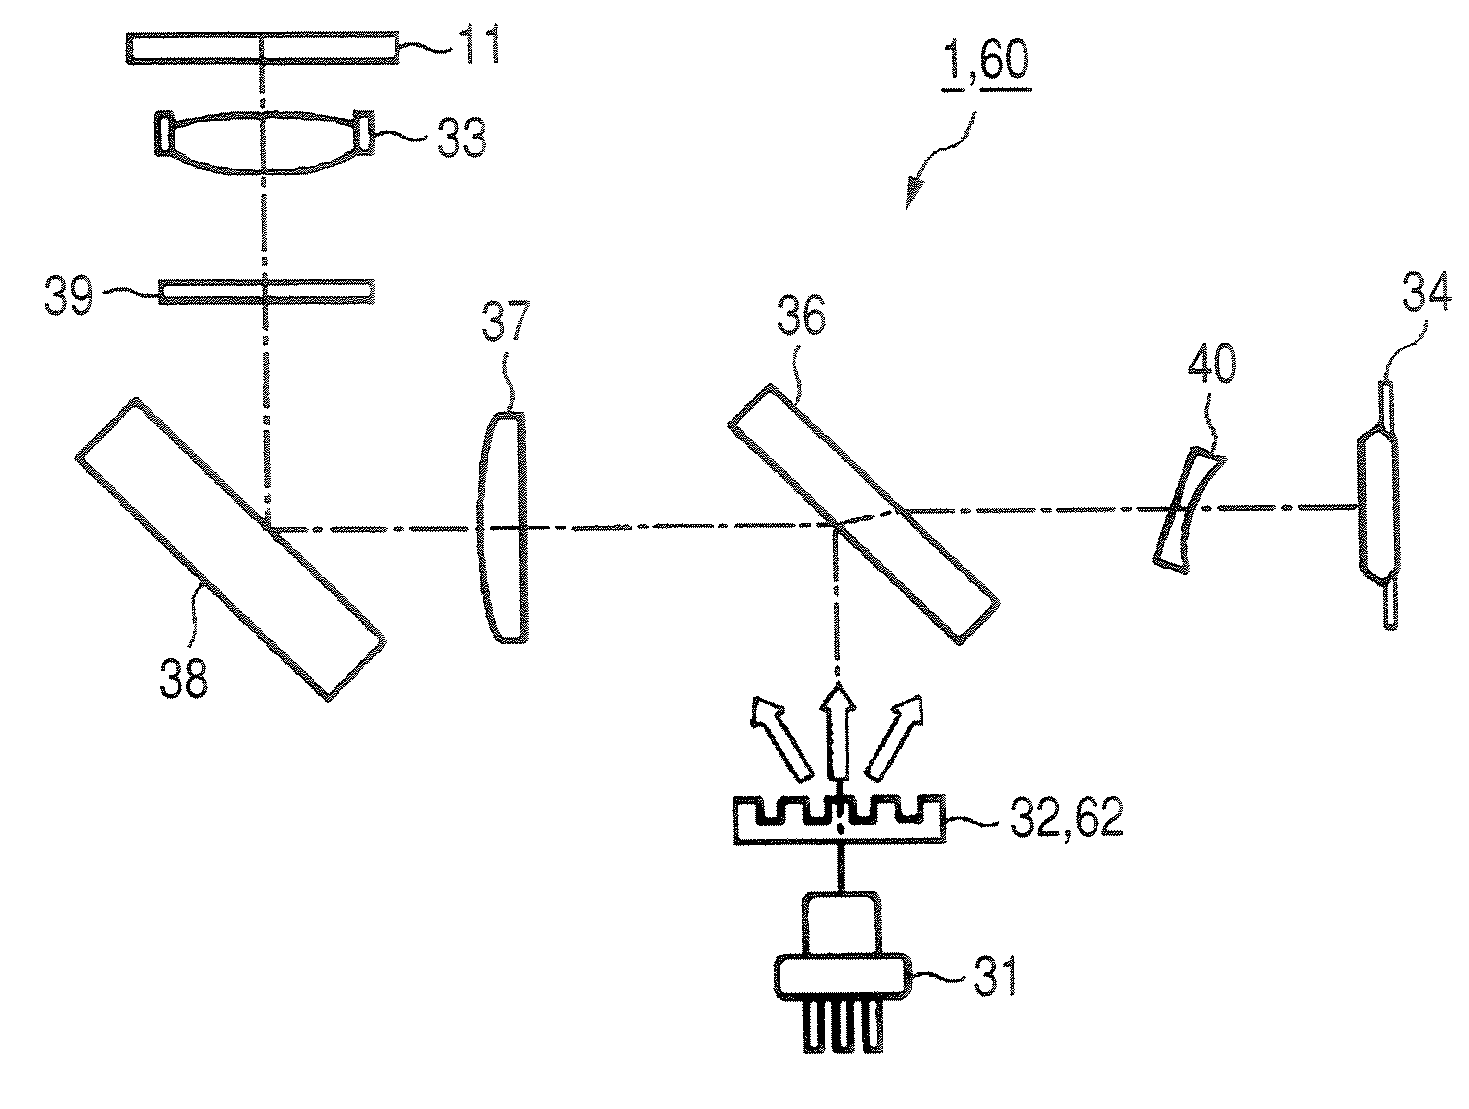 Optical pickup and optical disc apparatus